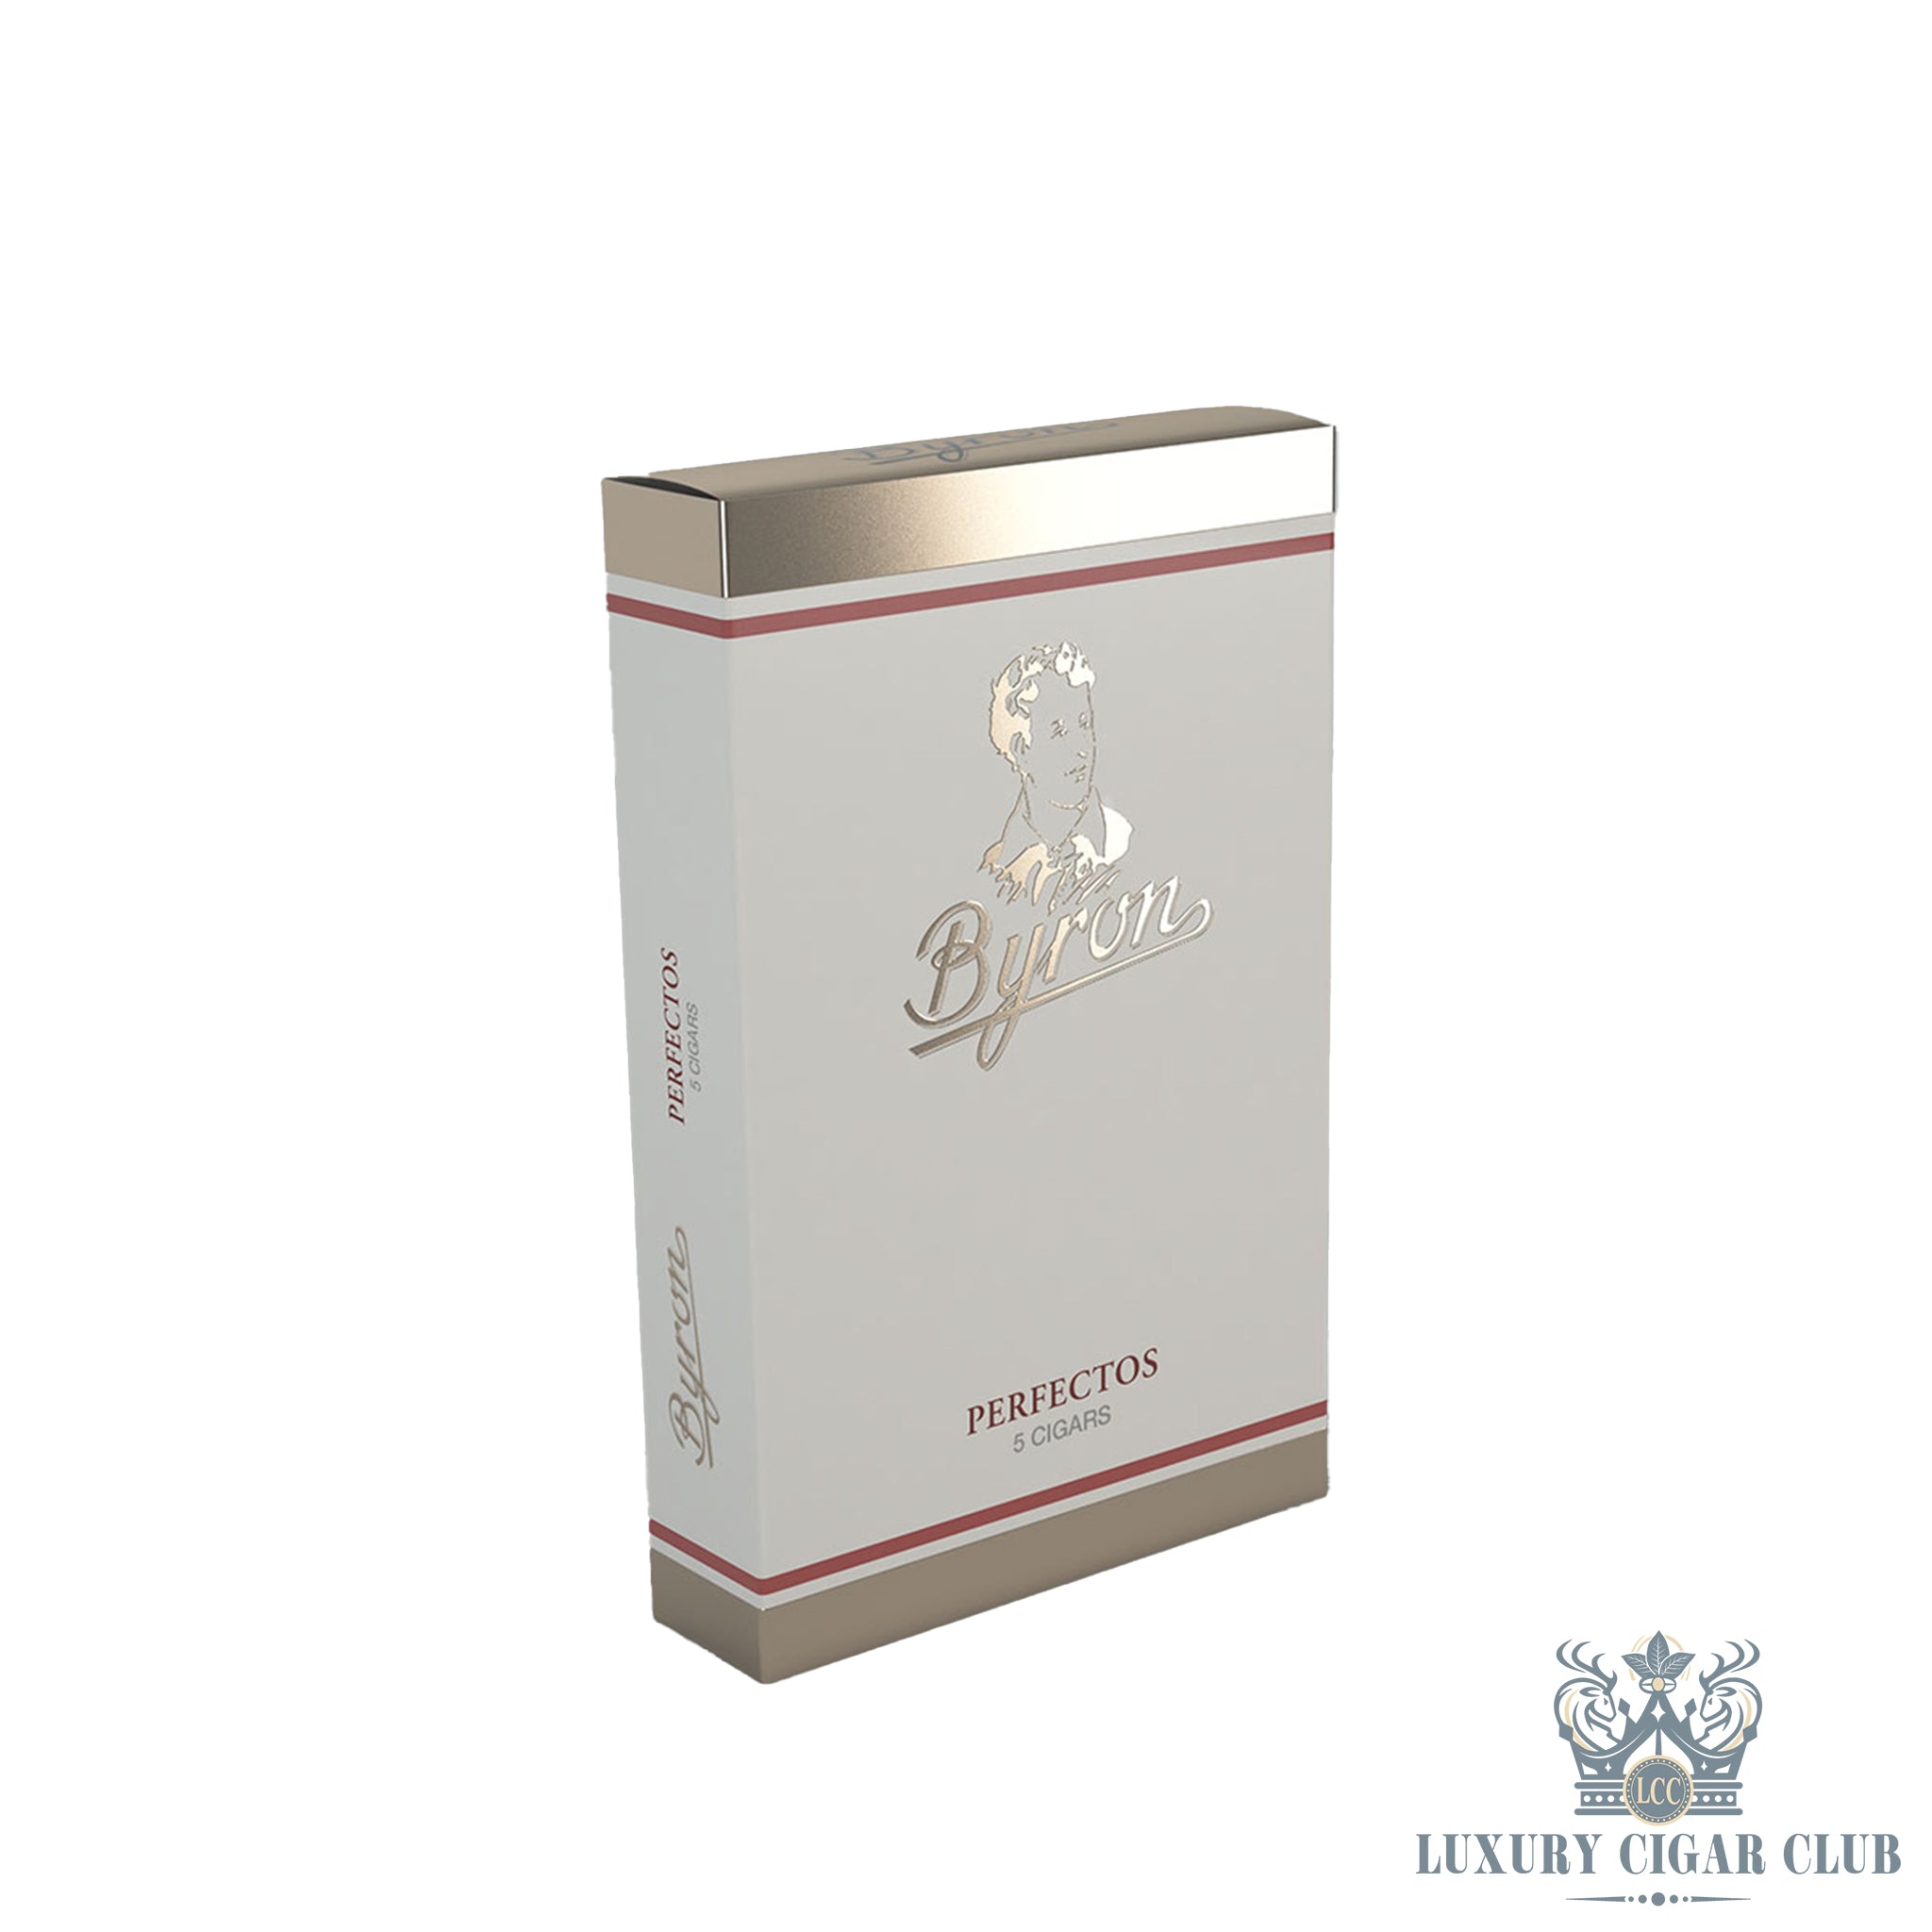 Buy Byron Seleccion 1850 Perfectos 5 Pack Cigars Online